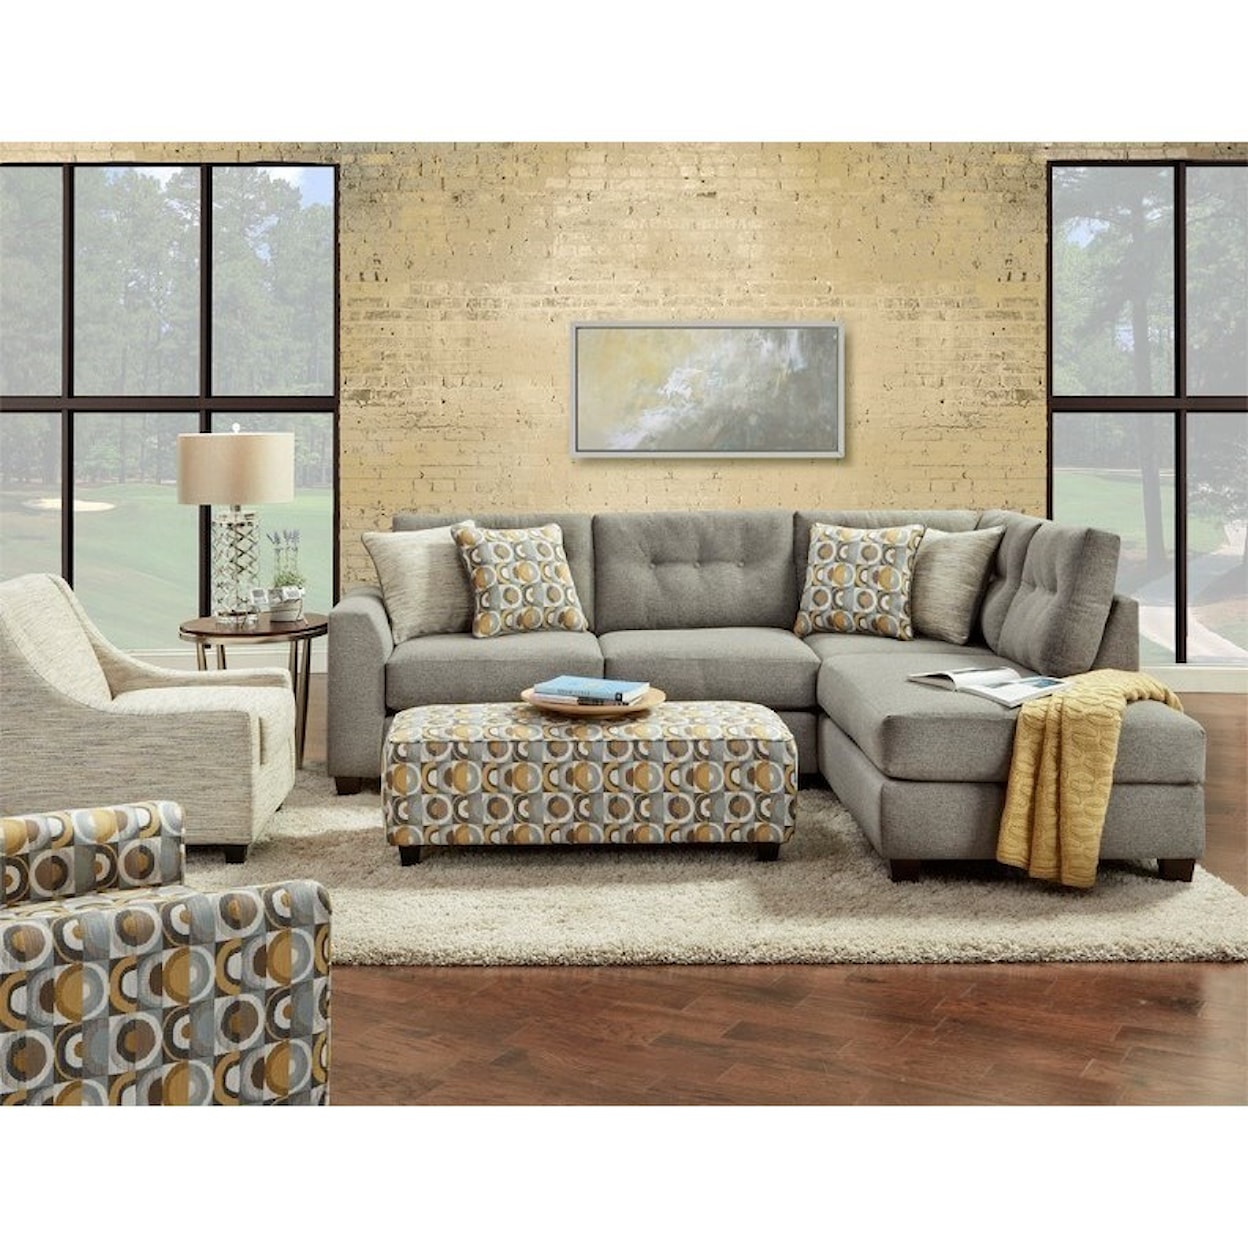 Fusion Furniture 8210-KP DILLIST MICA Accent Chair